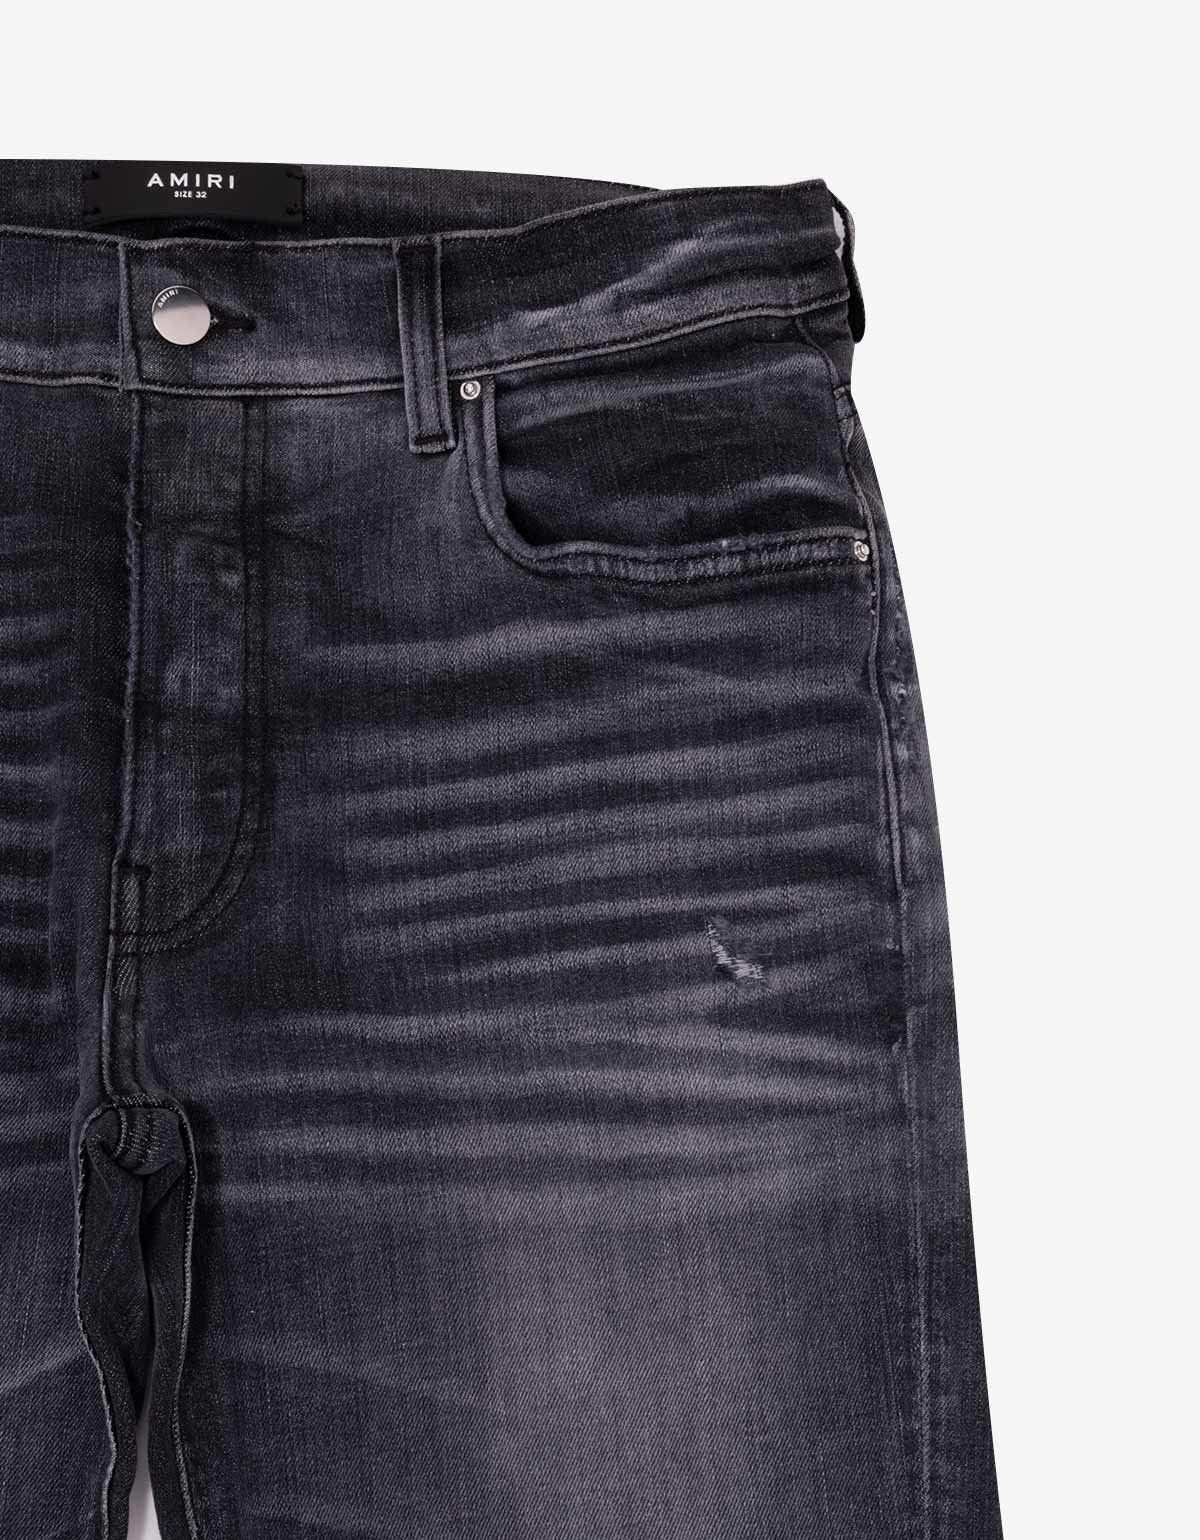 Amiri Black Staggered Logo Jeans